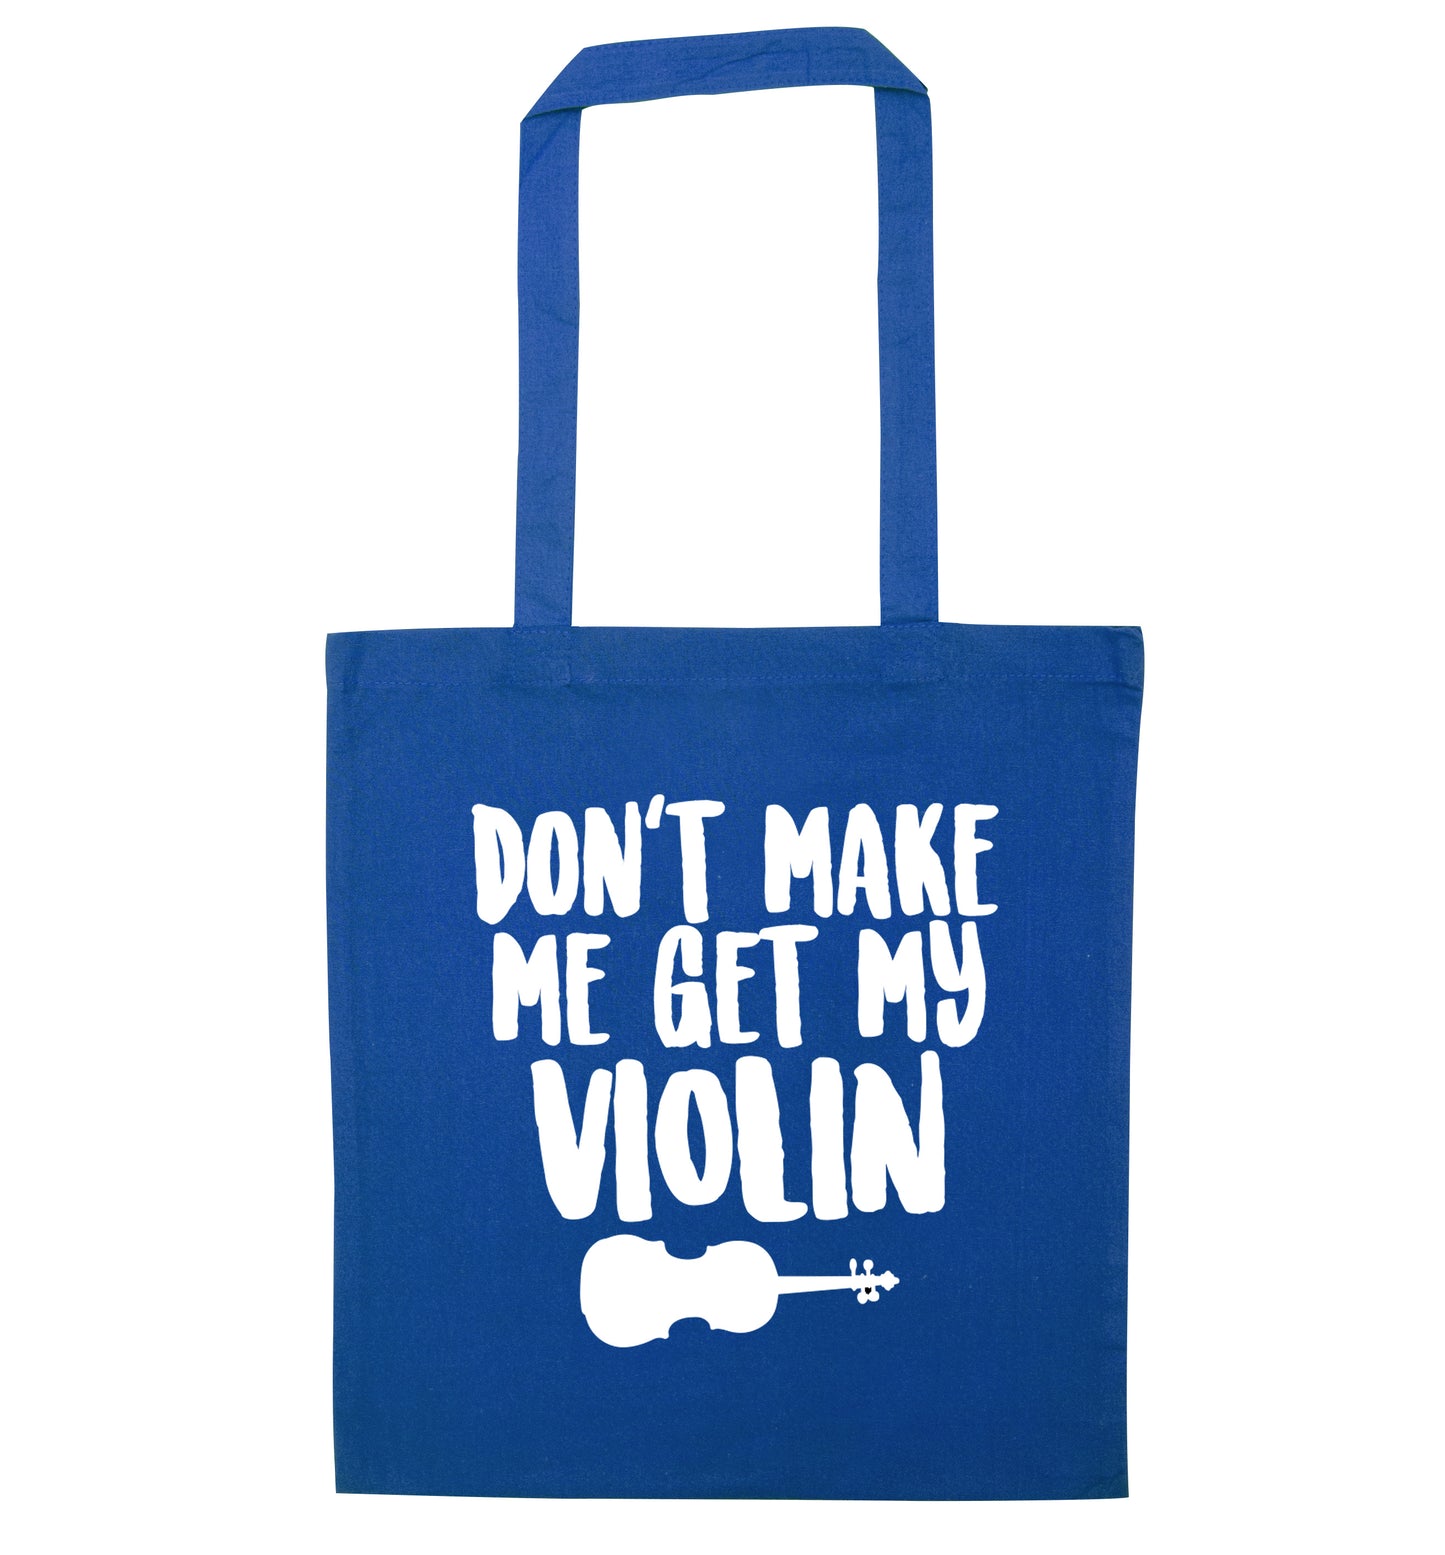 Don't make me get my violin blue tote bag